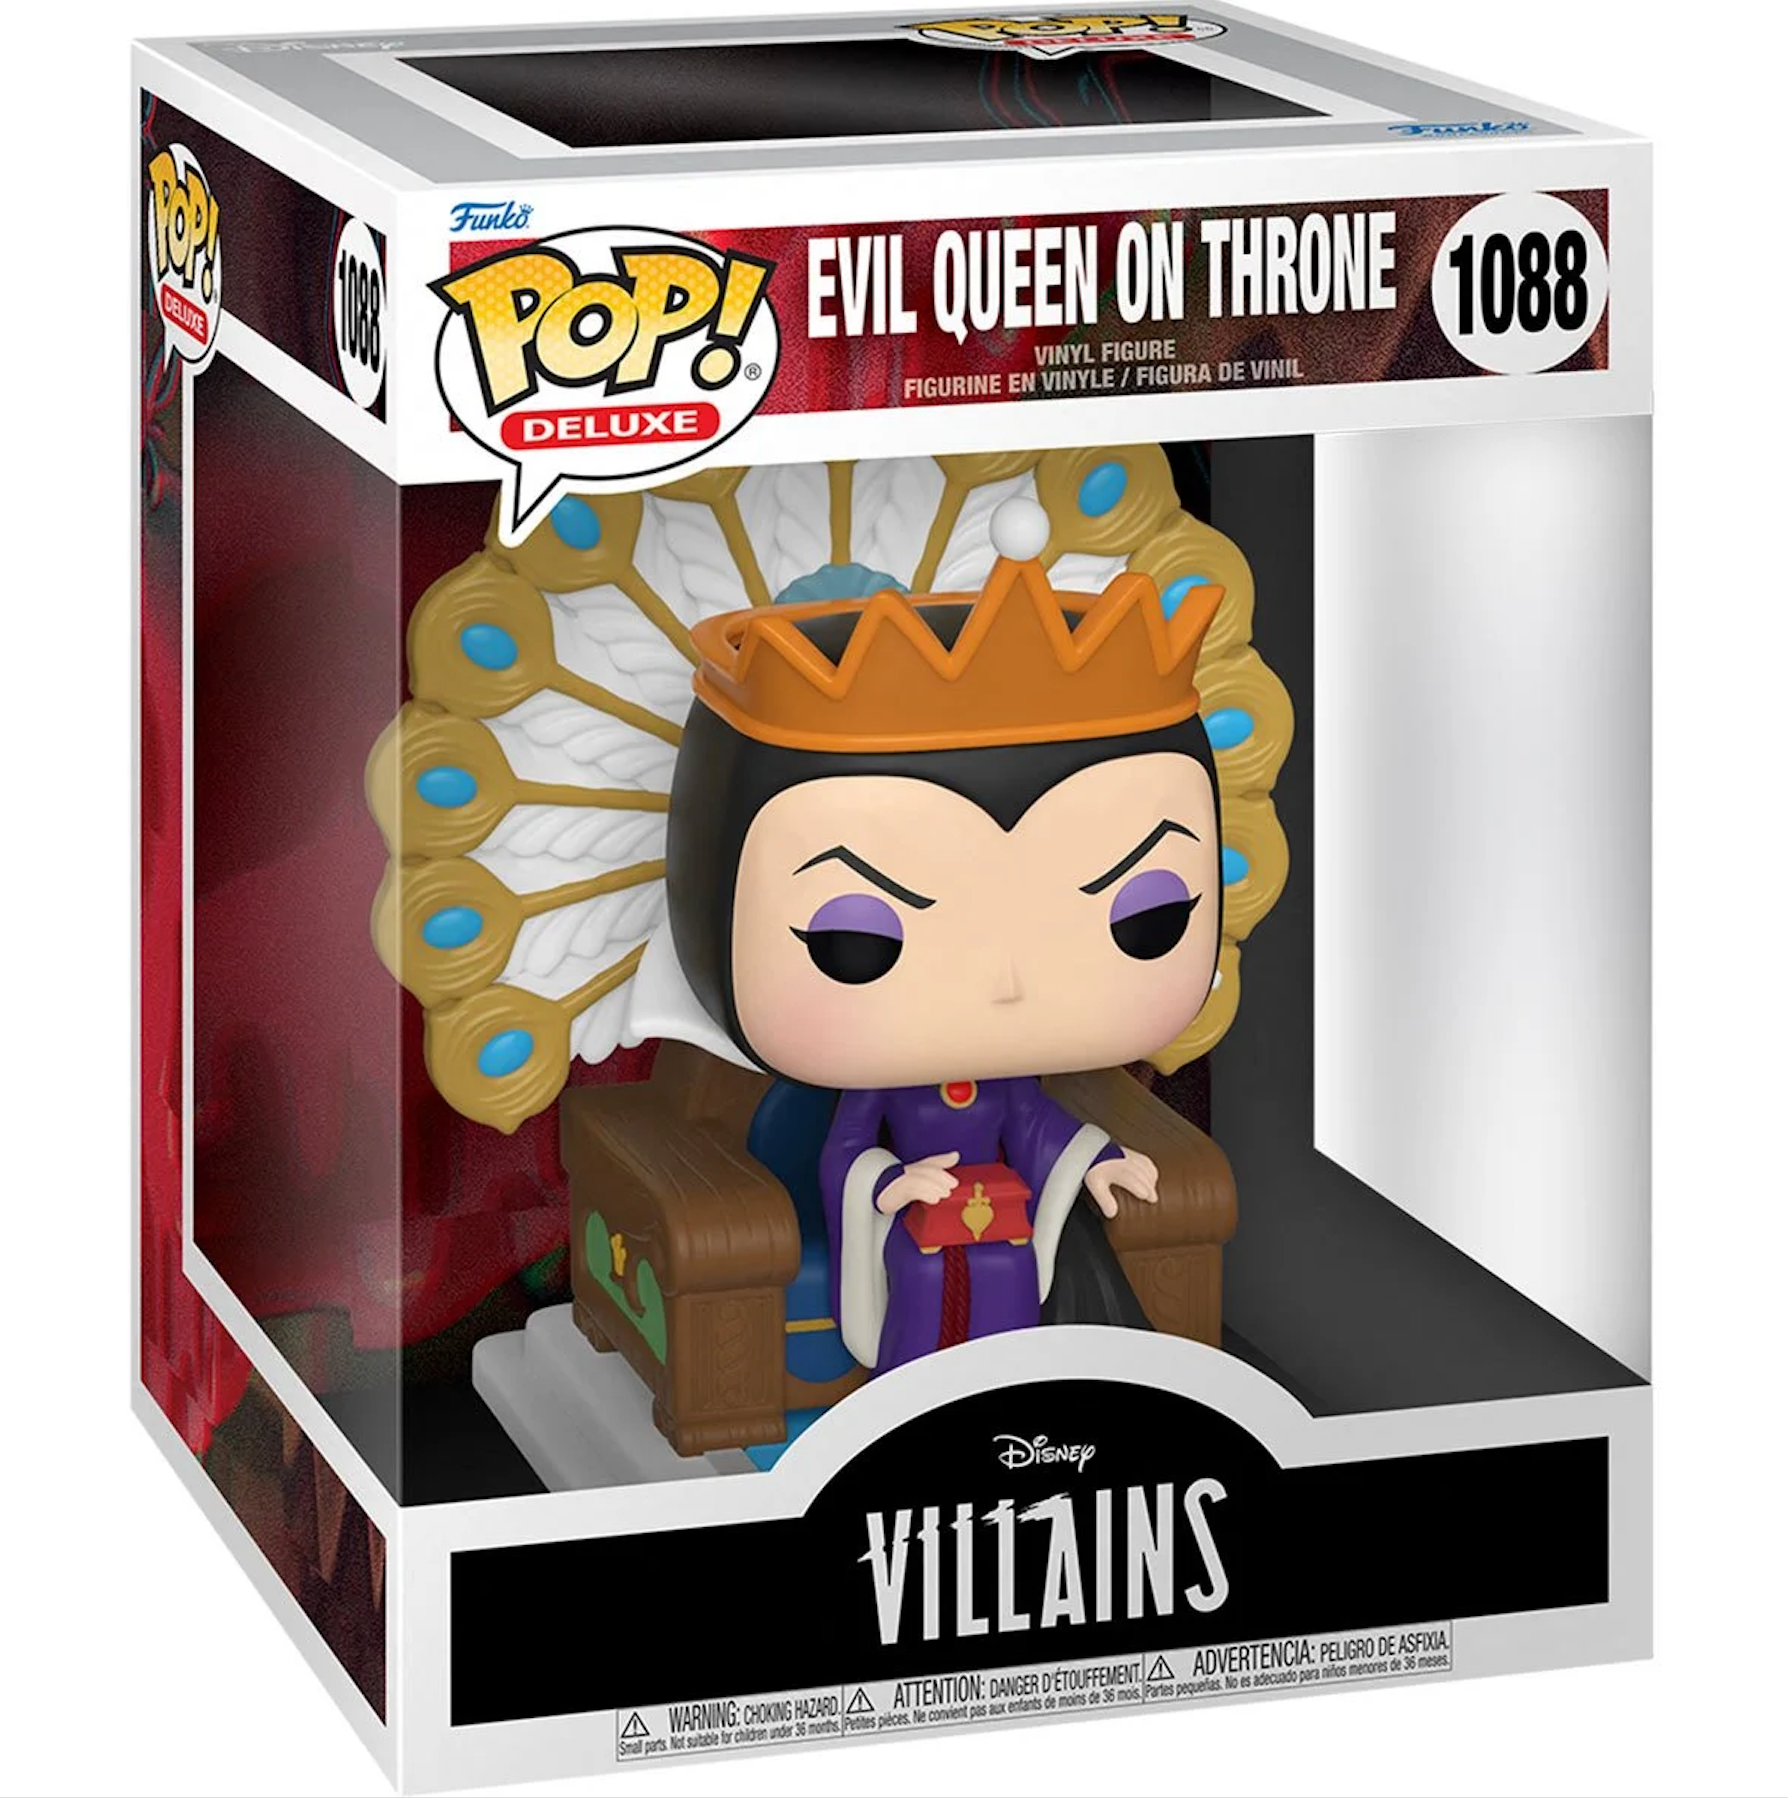 Disney Villains - Evil Queen on Throne Pop! Vinyl Figure (1088)